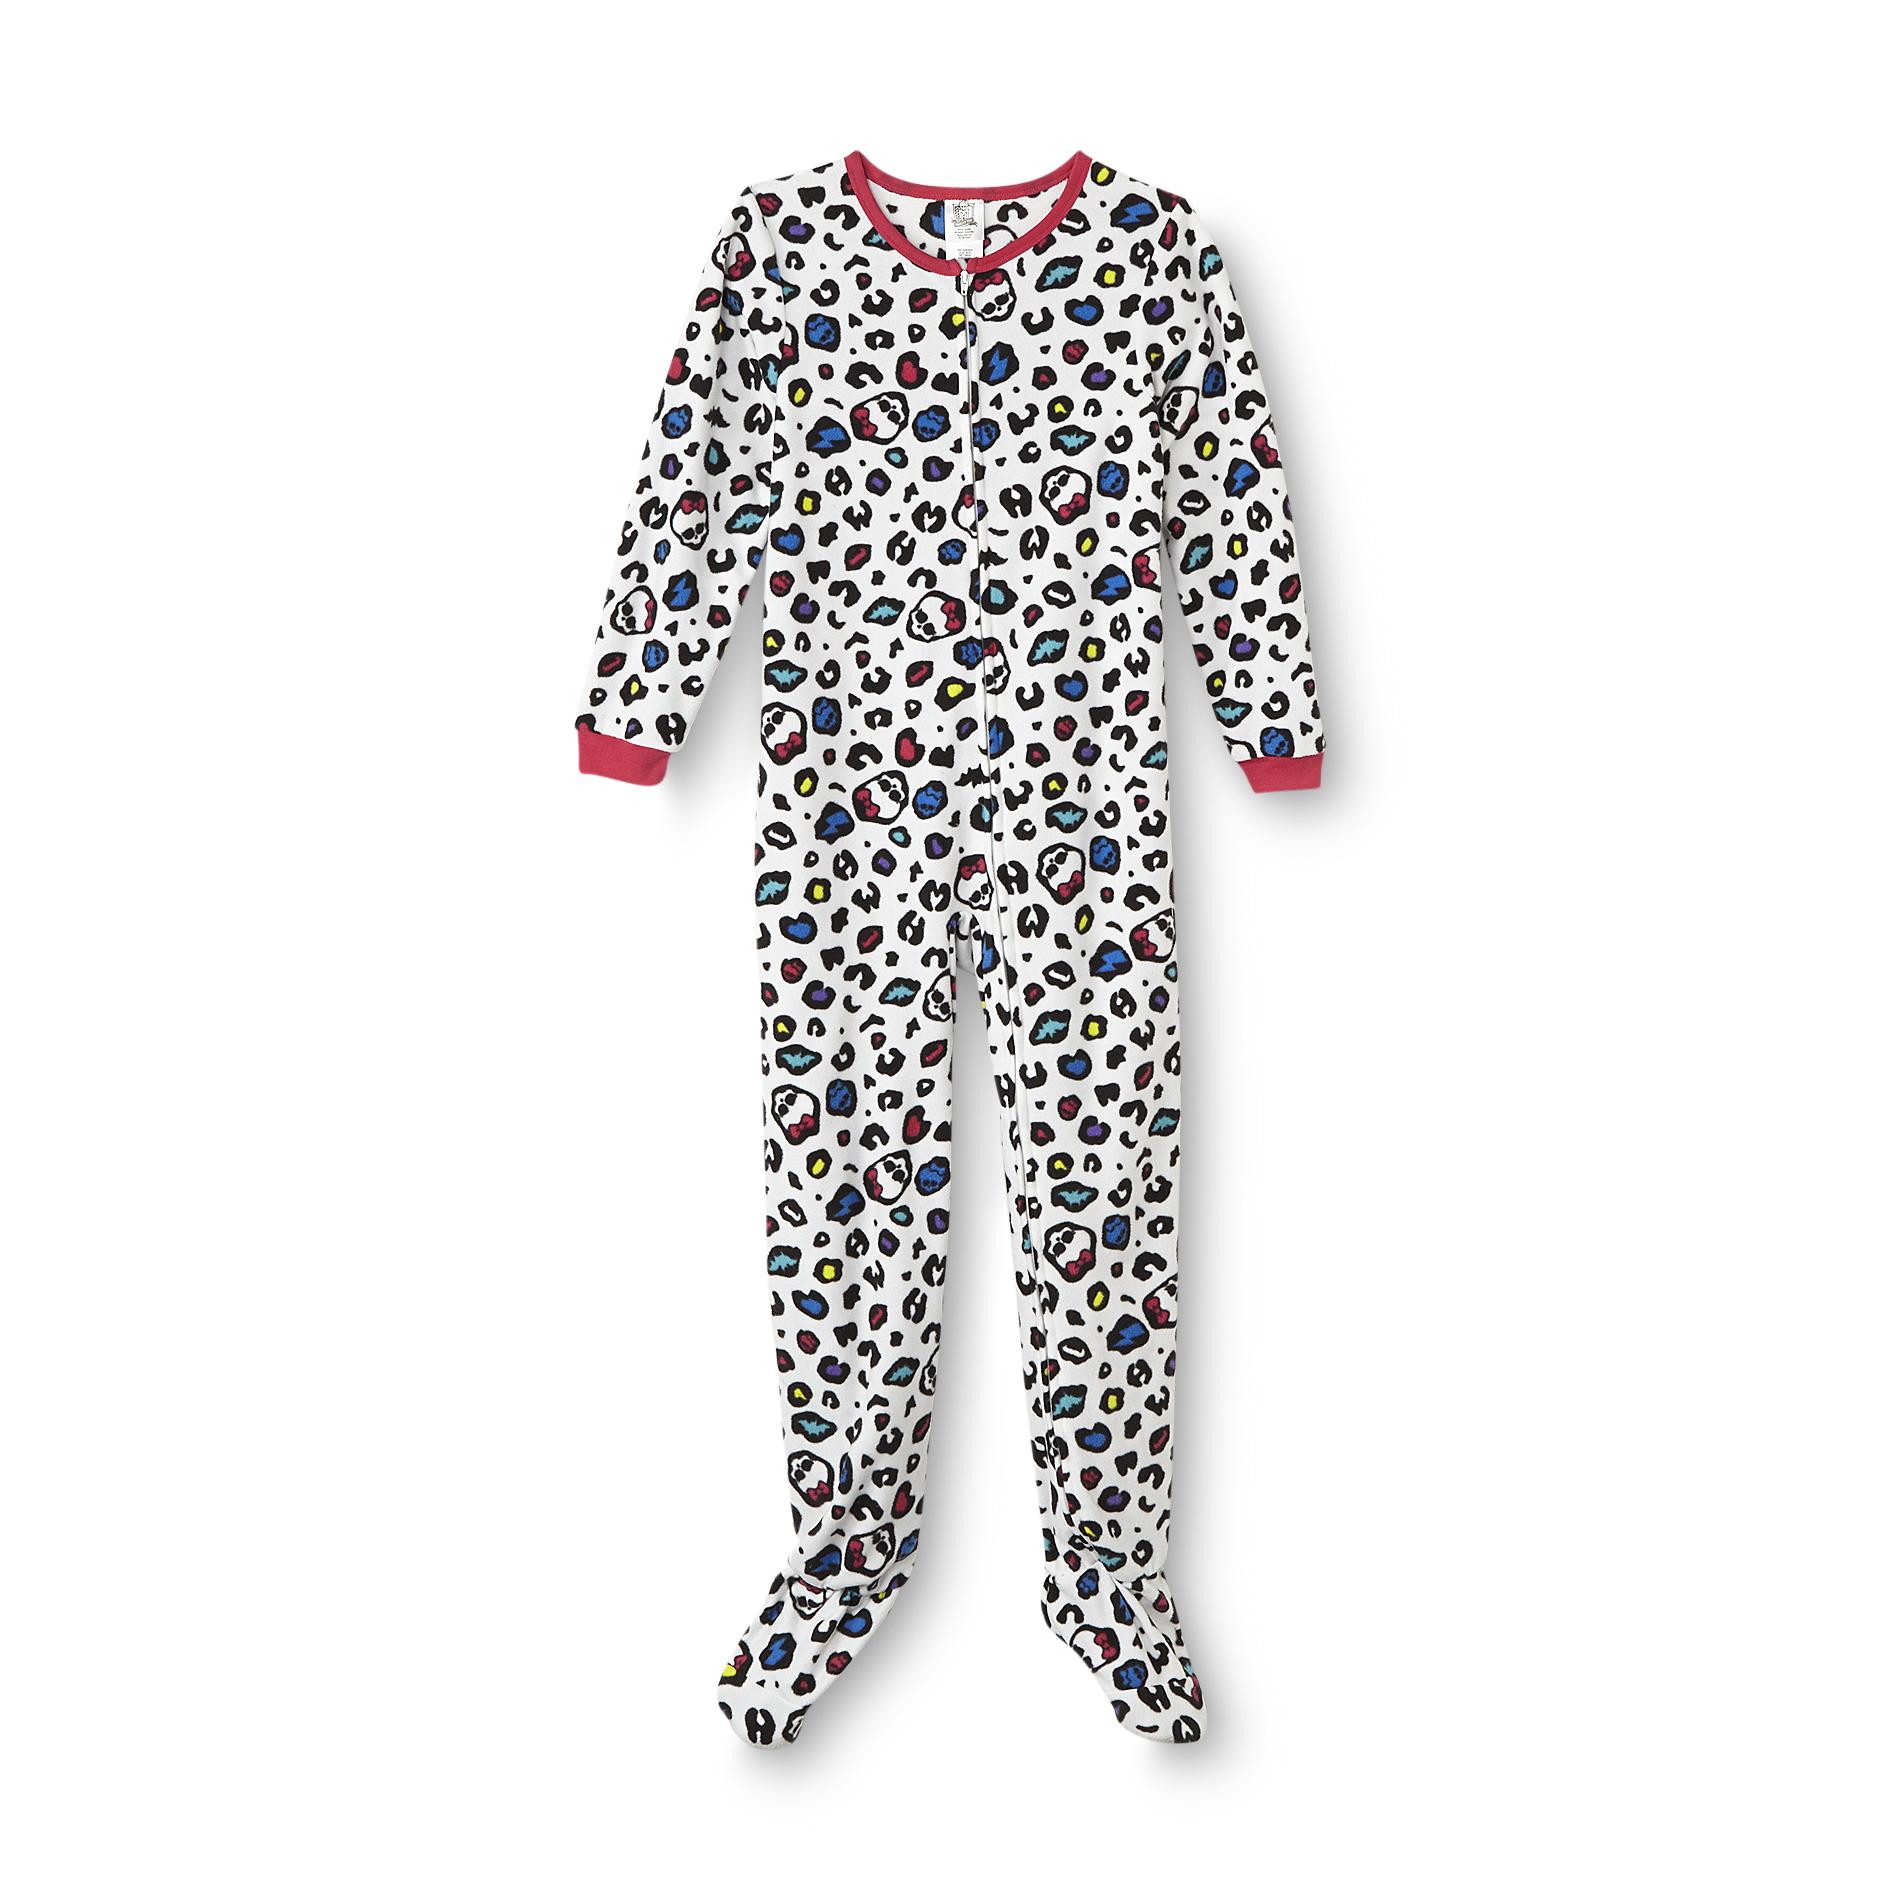 Monster High Girl's Footed Sleeper Pajamas - Leopard Print